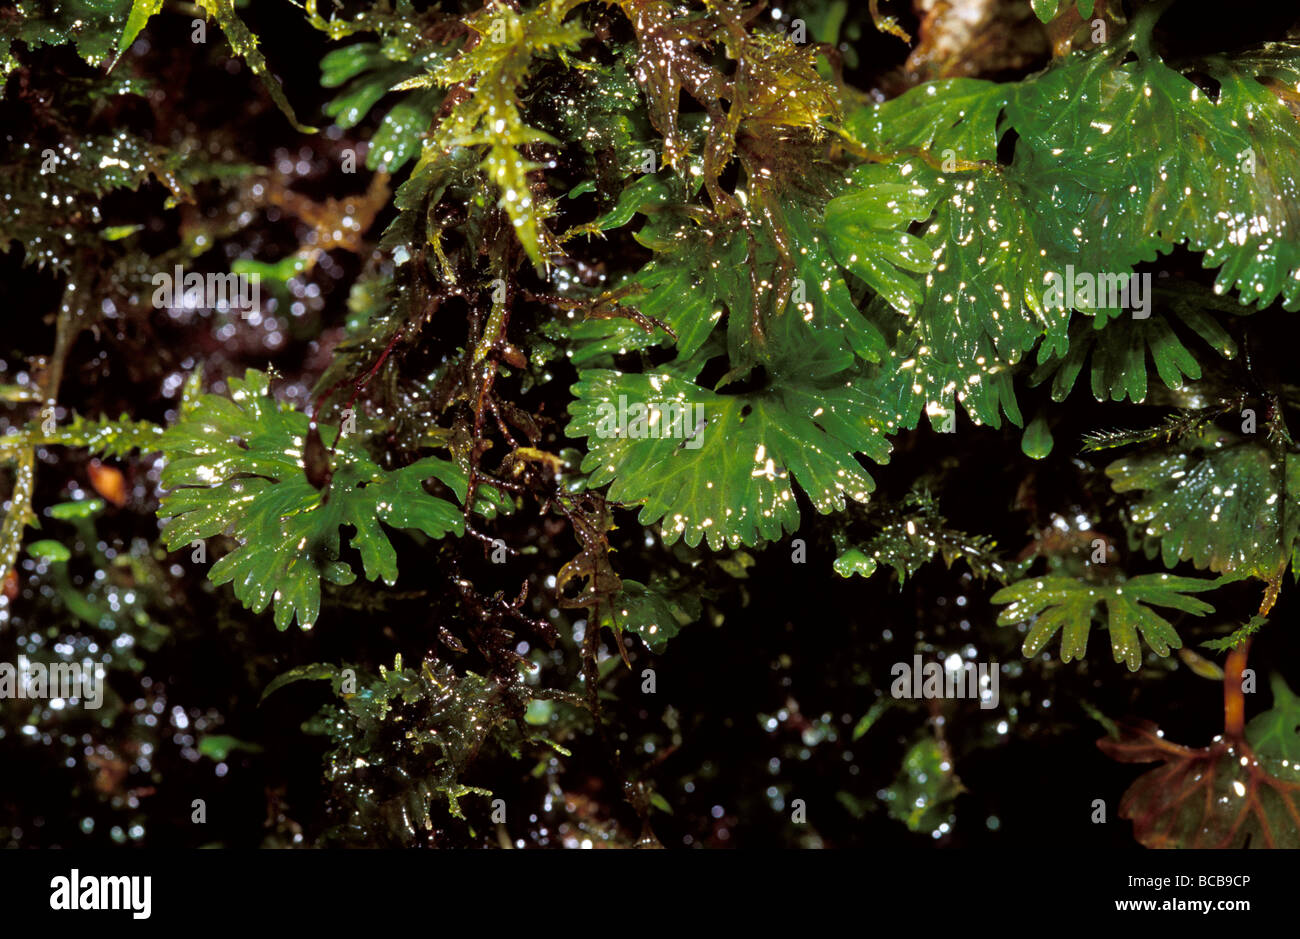 Thallose Liverwort, Hymenphyton Flabellatum, grow on Beech forest logs Stock Photo